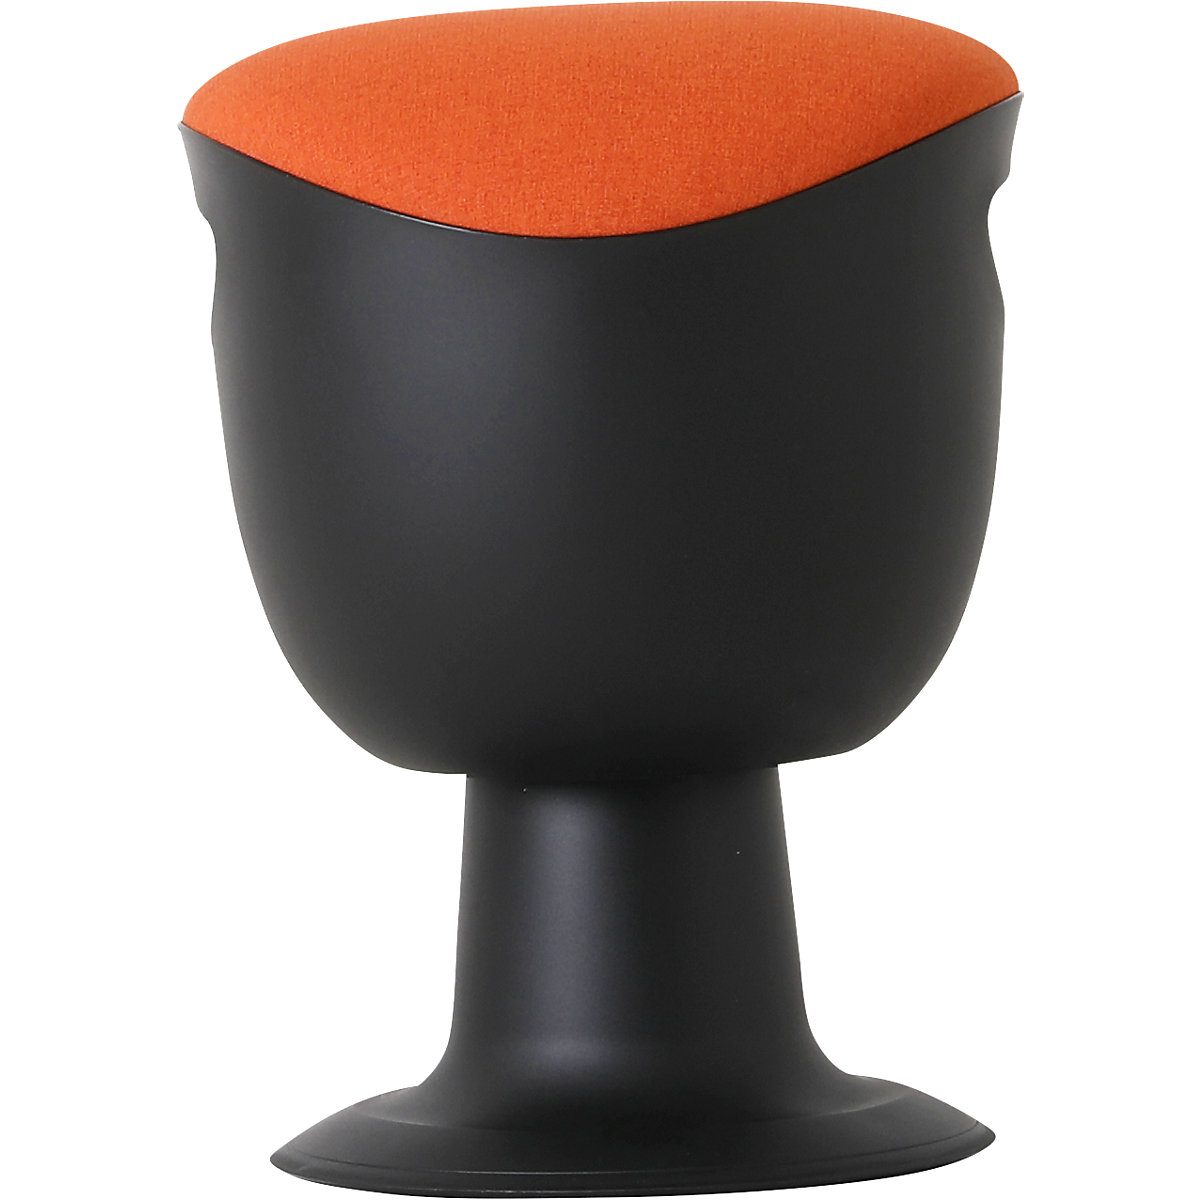 Flexible stool, height adjustable 465 – 585 mm, upholstered seat, orange cover-5